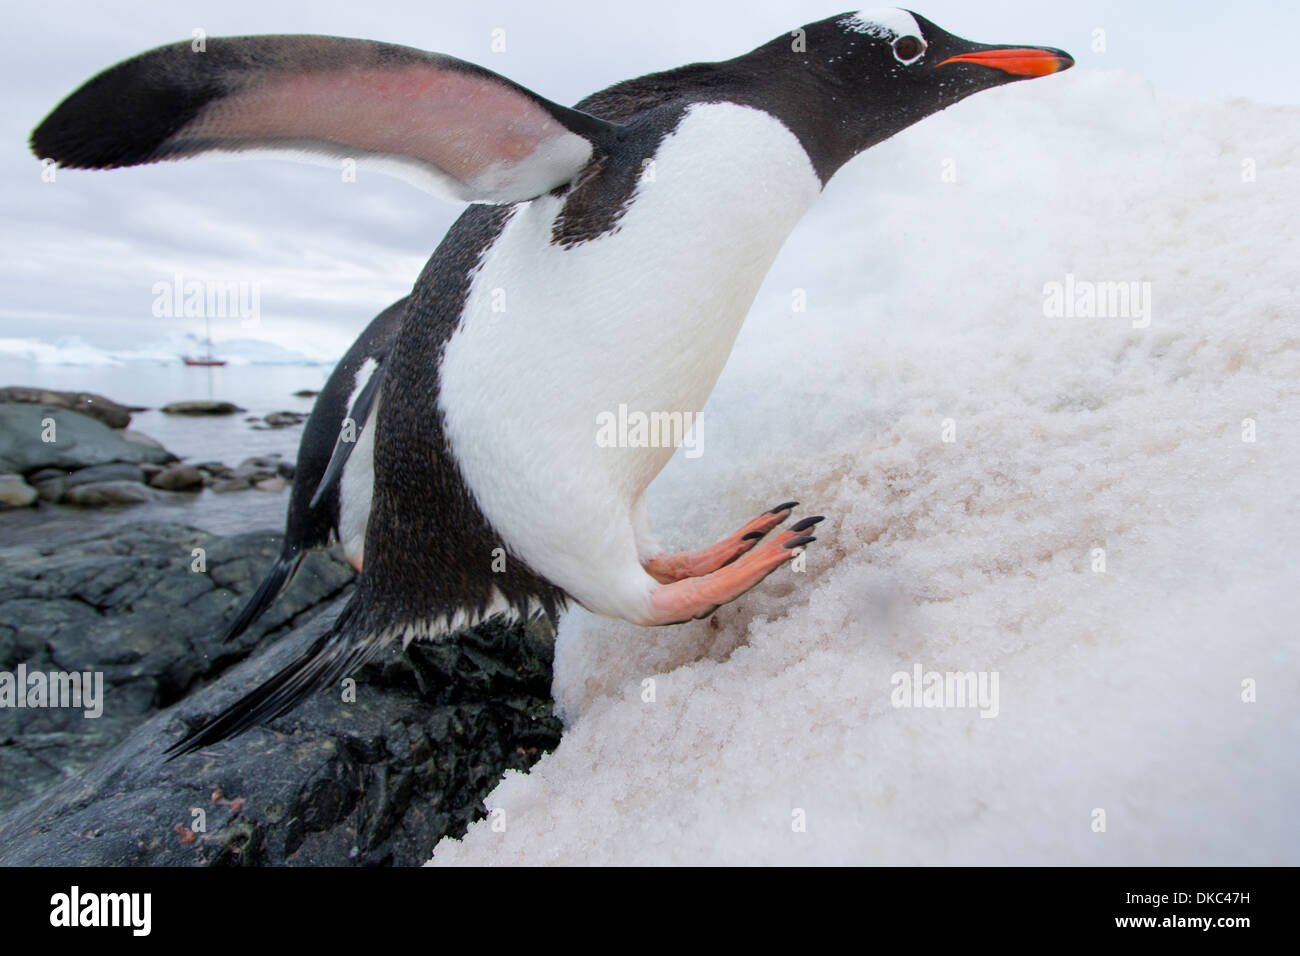 Лапа ласта. Папуанский Пингвин. Папуанский Пингвин Антарктида. Субантарктический Пингвин. Пингвиньи лапы.